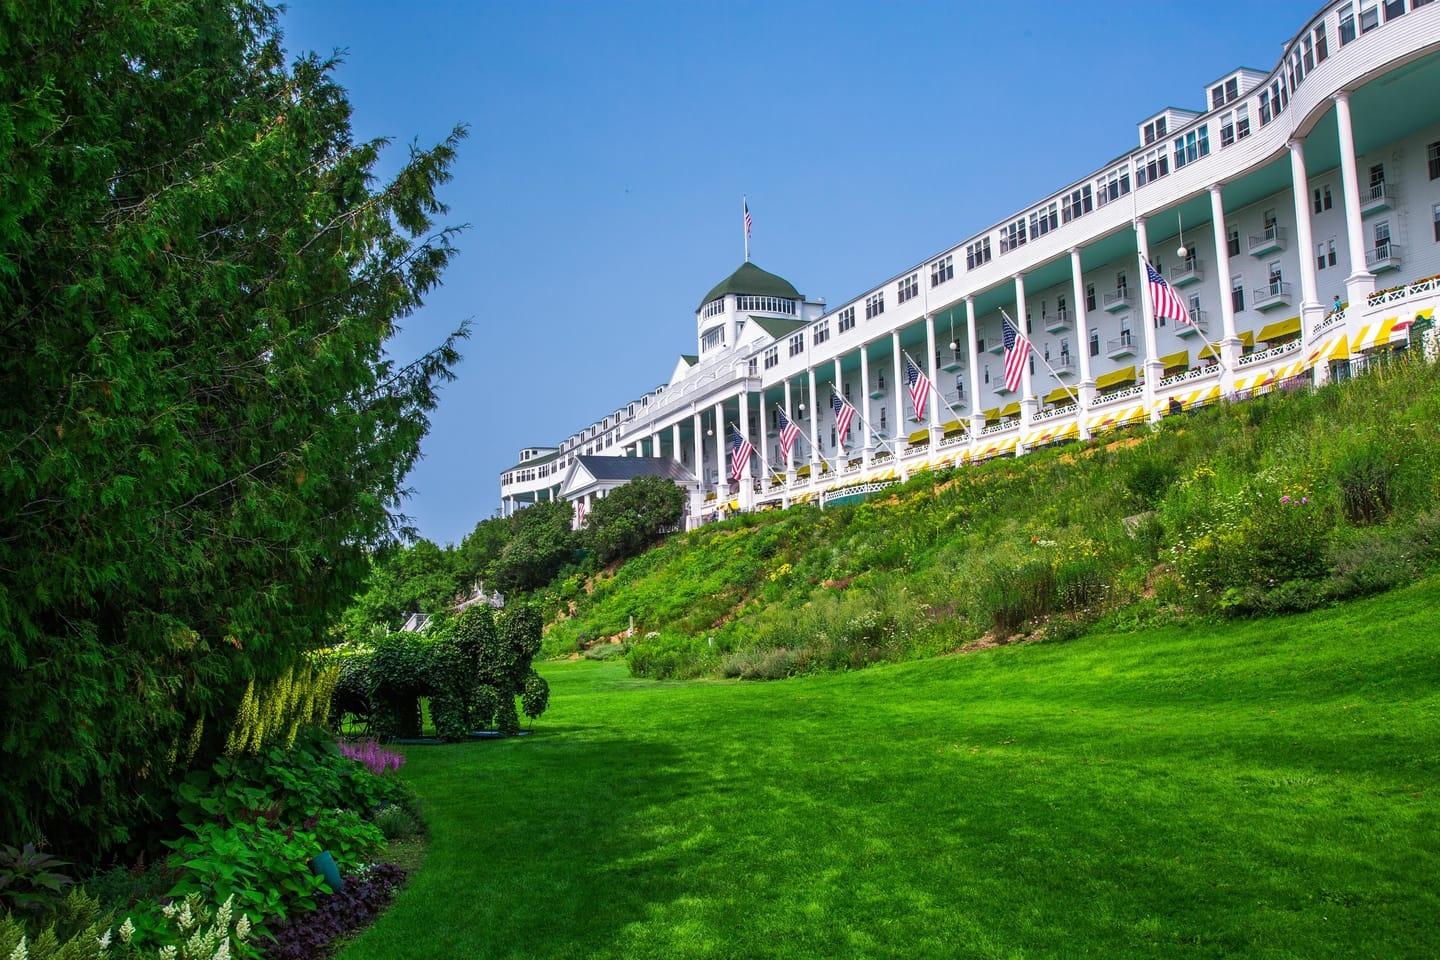 The Gem Miniature Golf at Grand Hotel - Mackinac Island Tourism Bureau